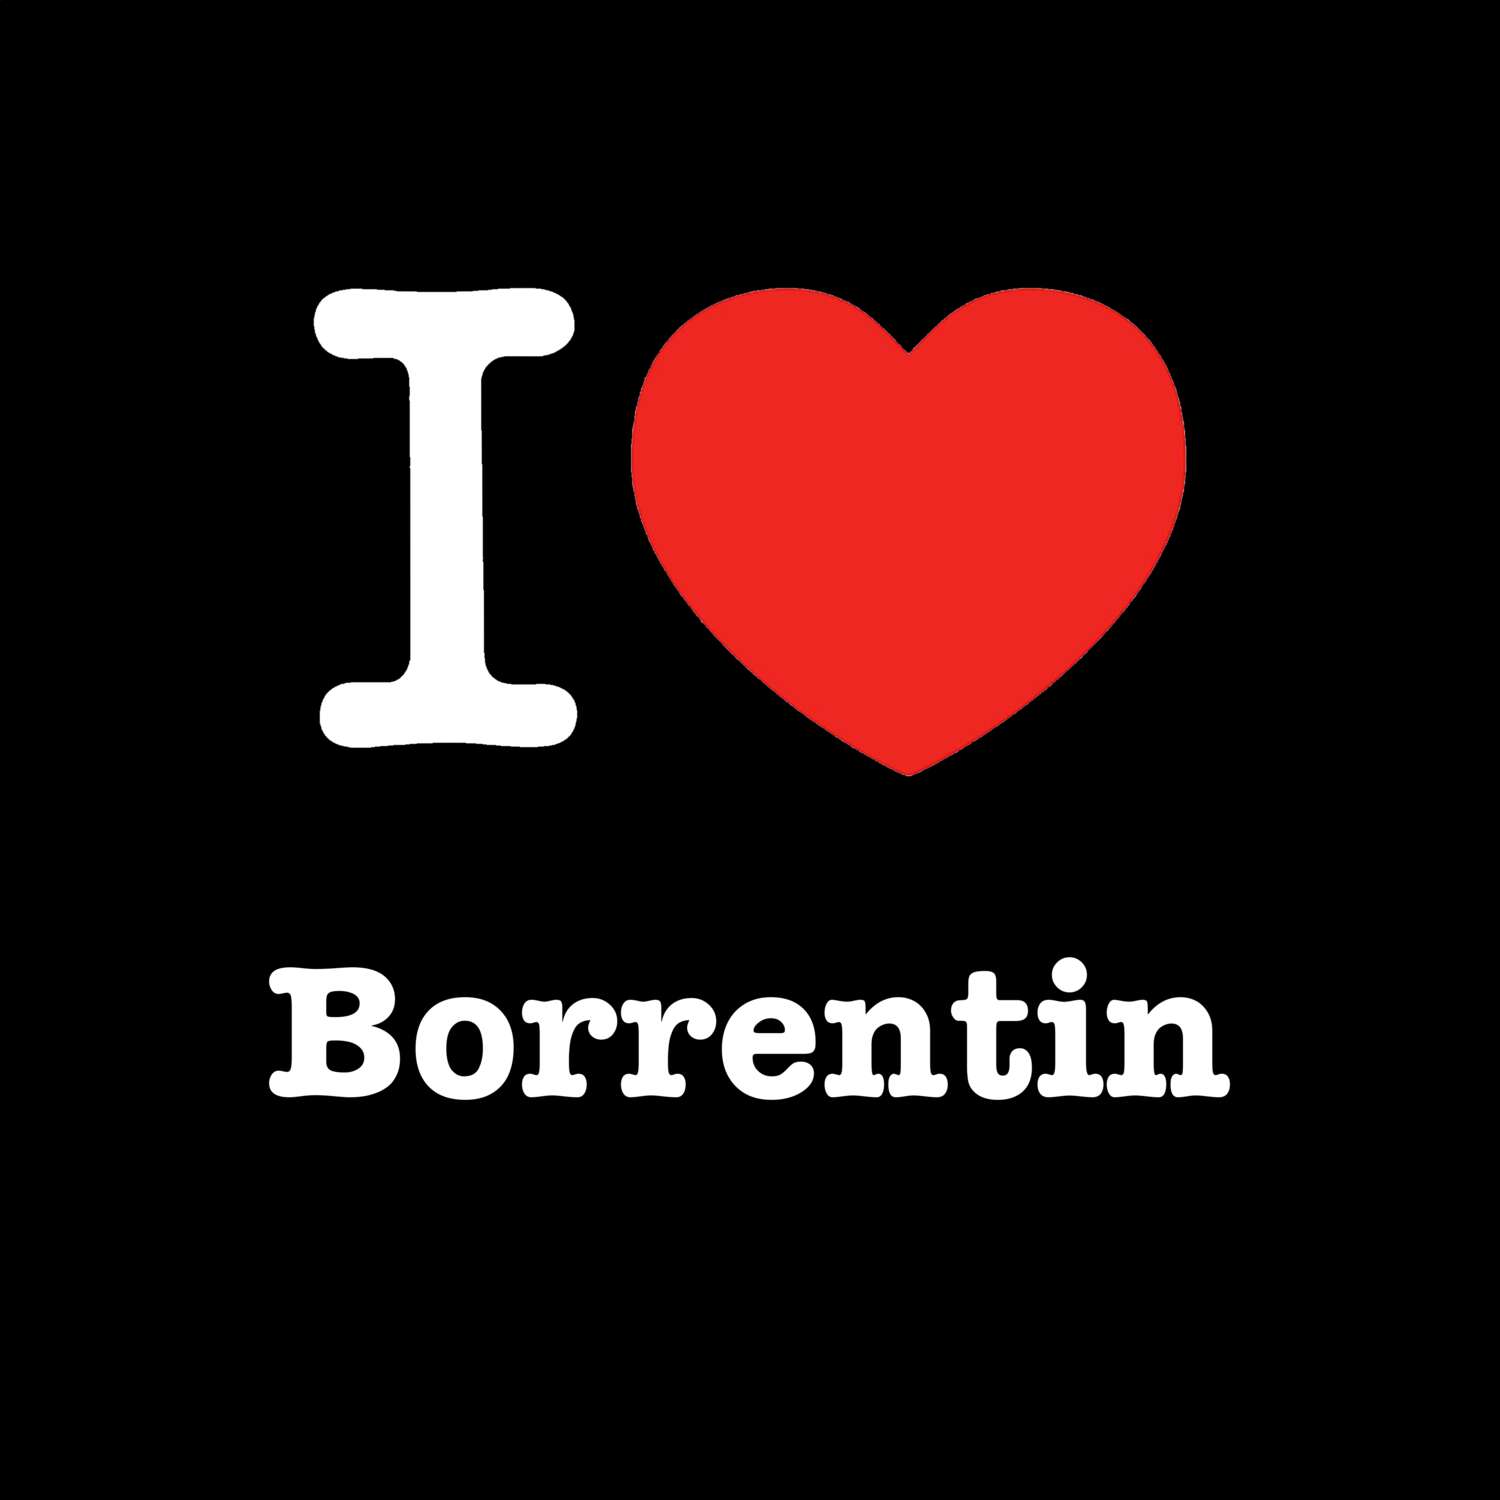 Borrentin T-Shirt »I love«